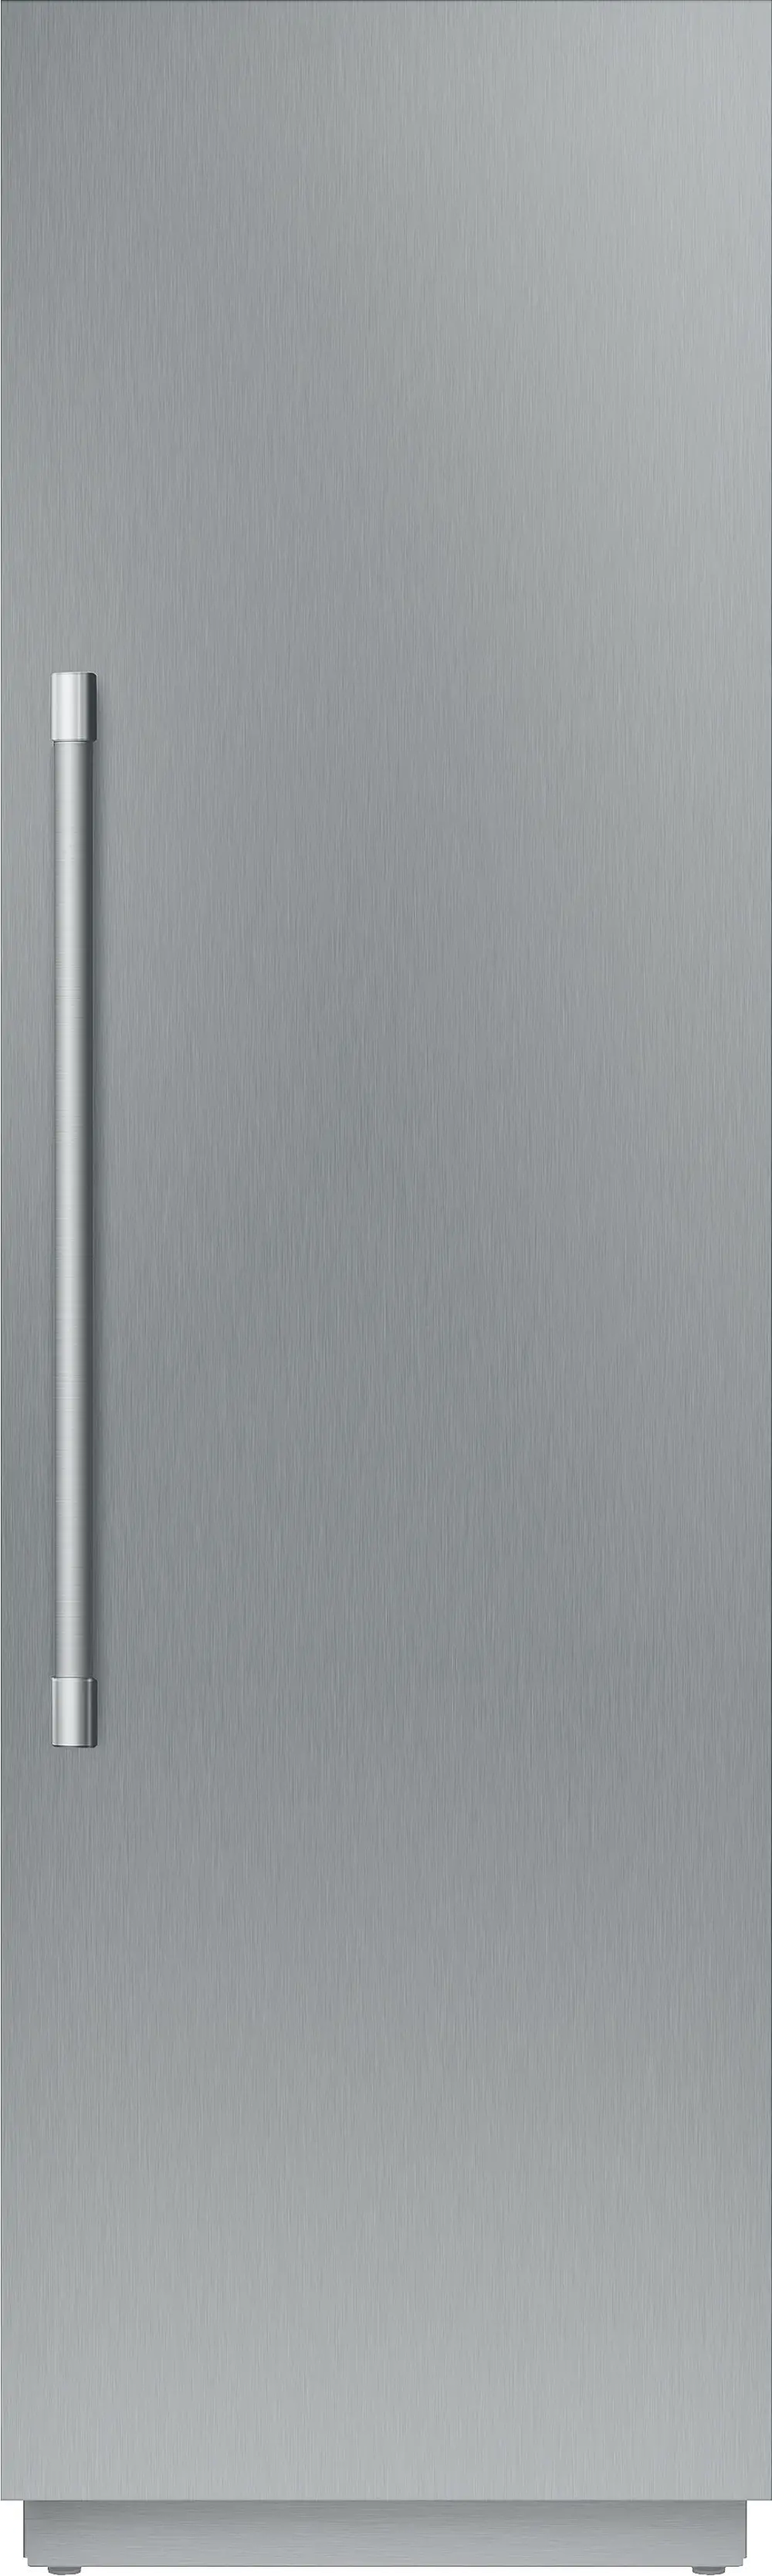 T24IR902SP Thermador 24 Inch Column Refrigerator - Panel Ready, 13 cu. ft.-1